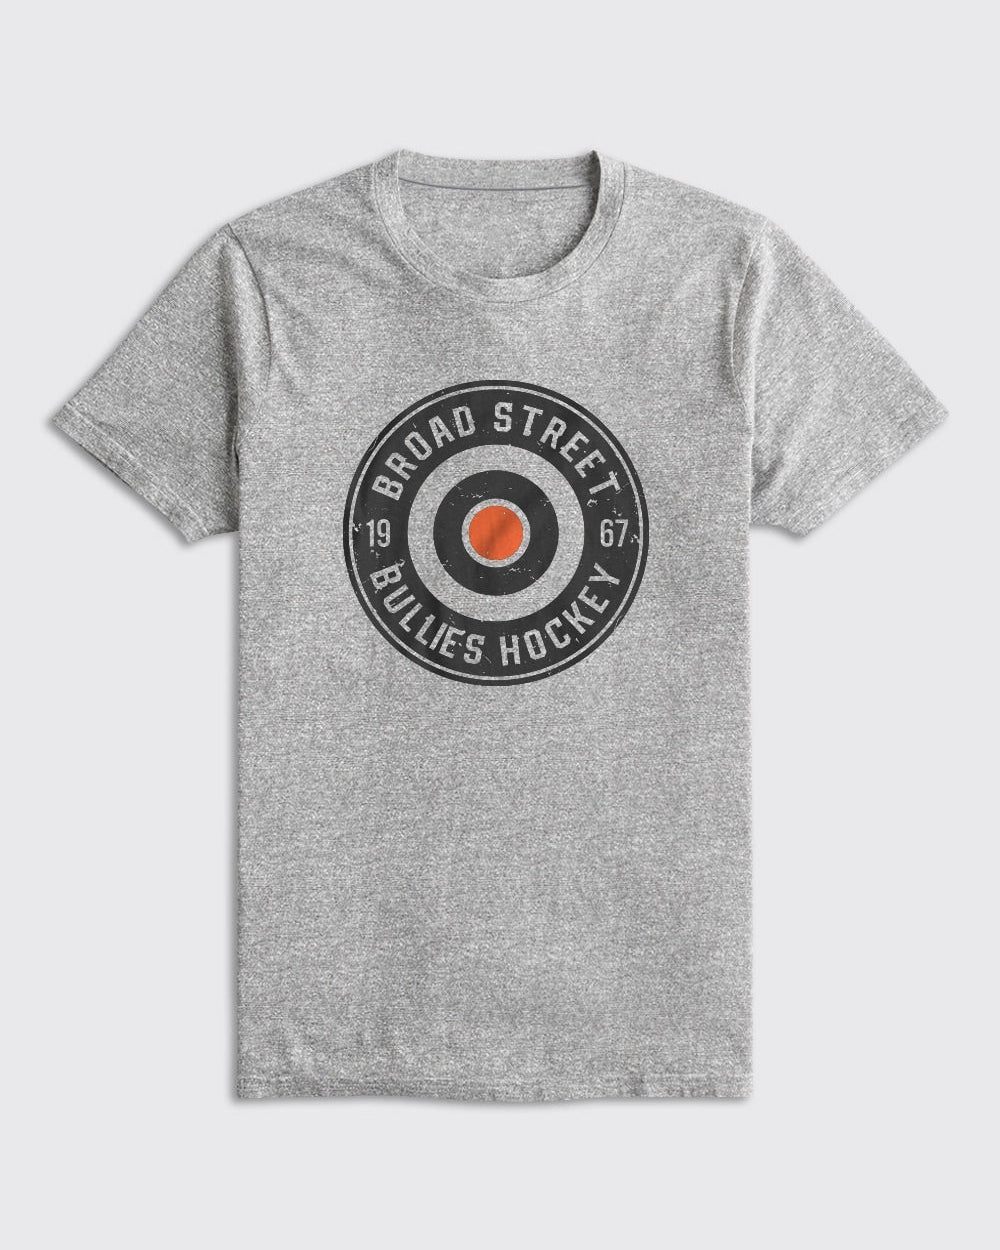 Philadelphia Flyers-Broad Street Bullies Hockey Shirt-Athletic Heather-Philly Sports Shirts